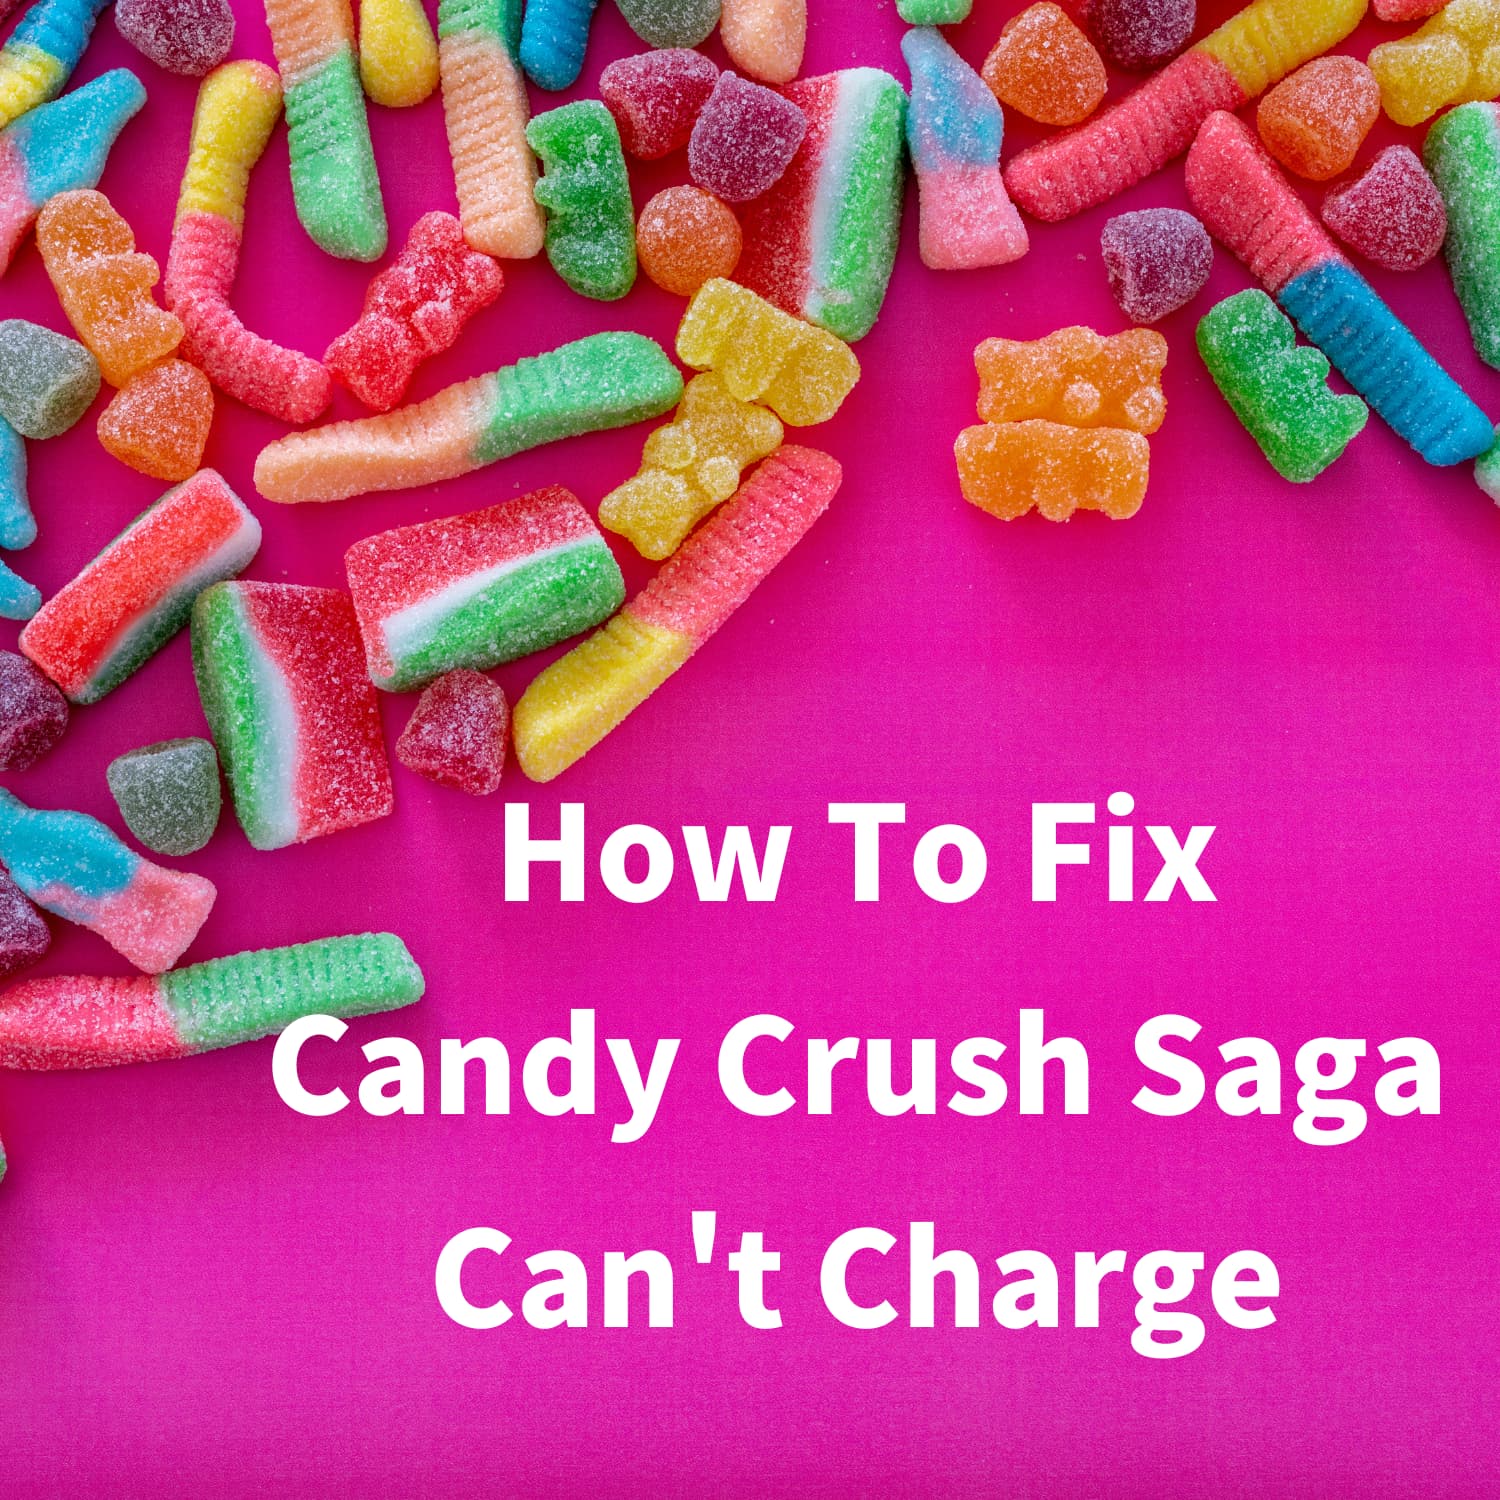 How To Fix Candy Crush Saga(CandyCrushSaga) Can't Charge #CandyCrushSaga